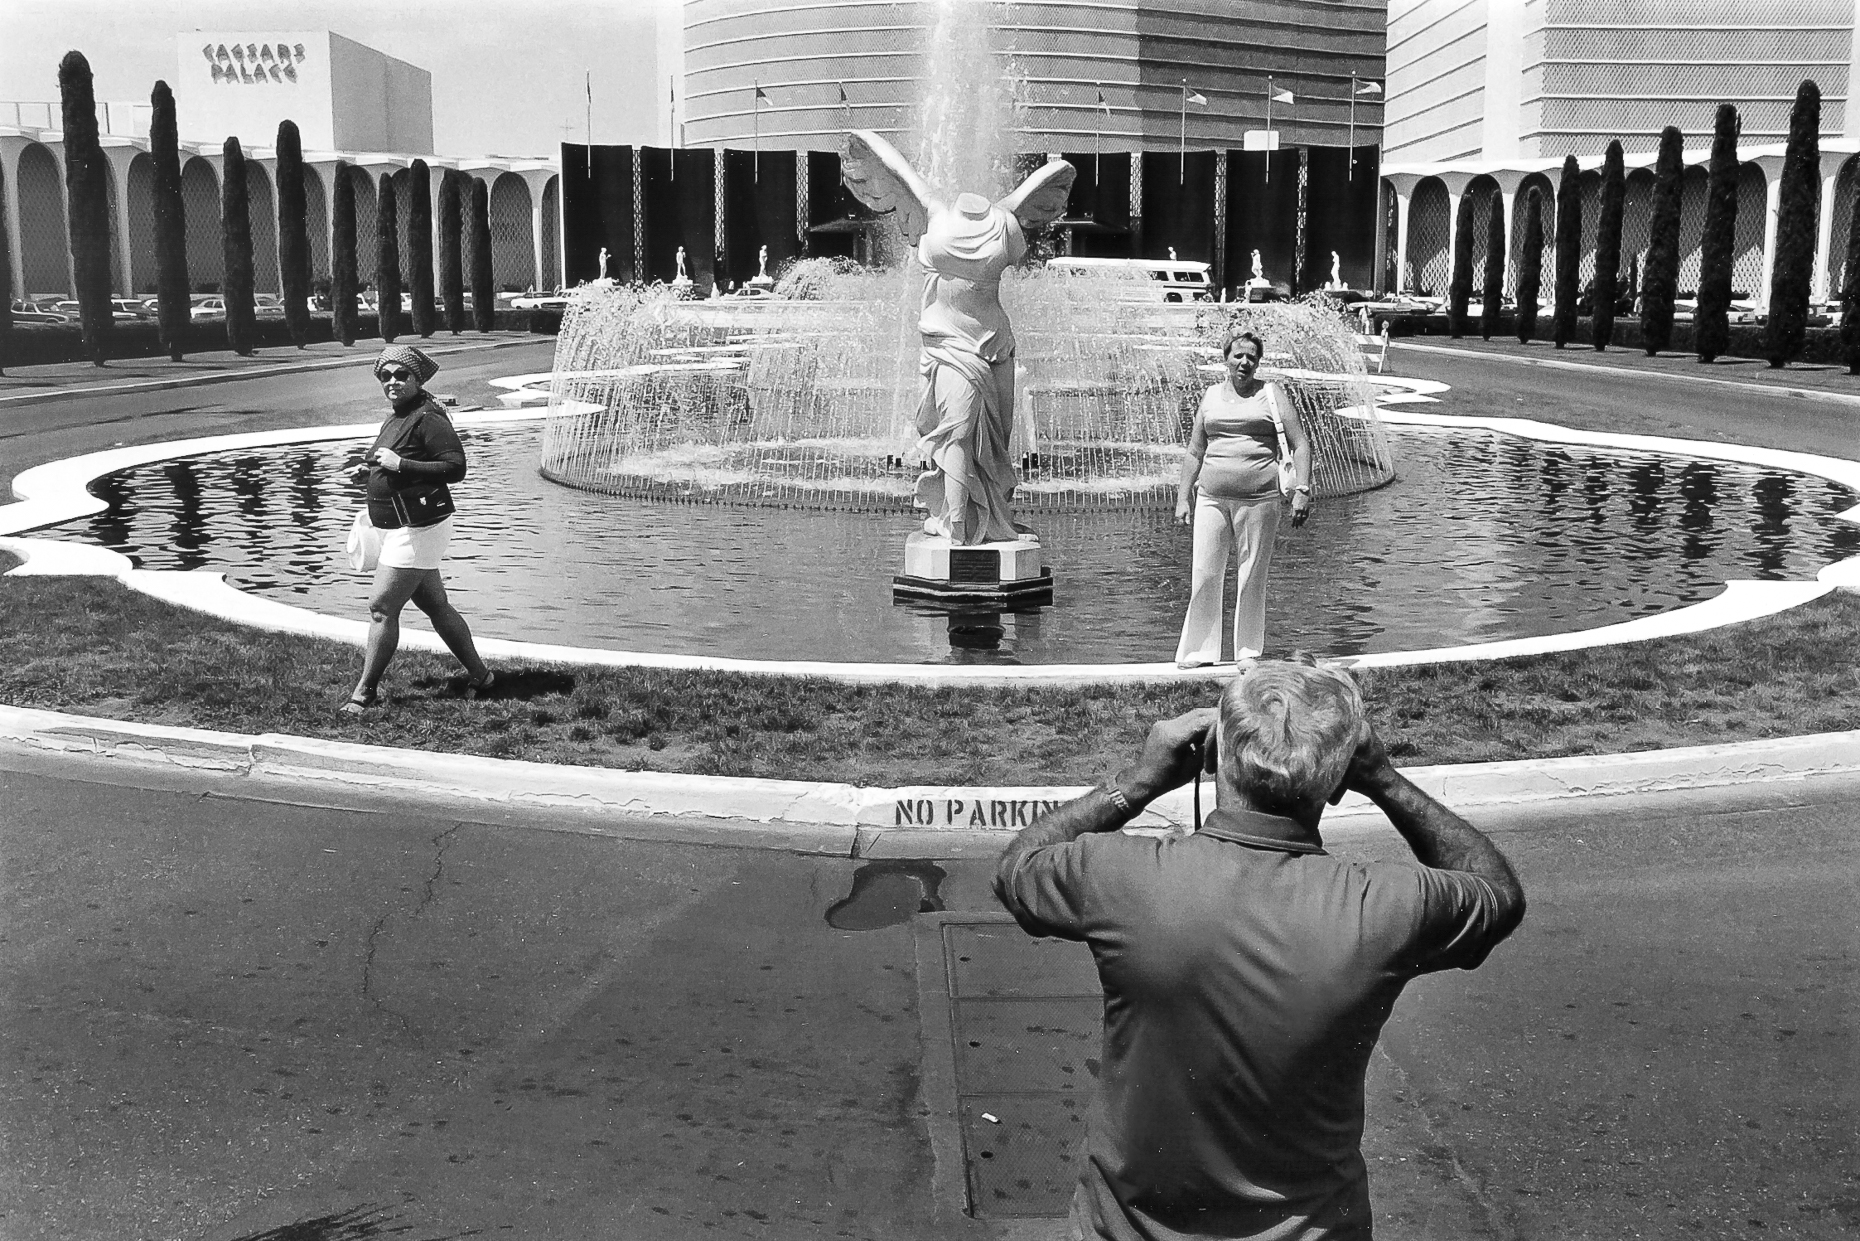   Las Vegas, Nevada, 1976  